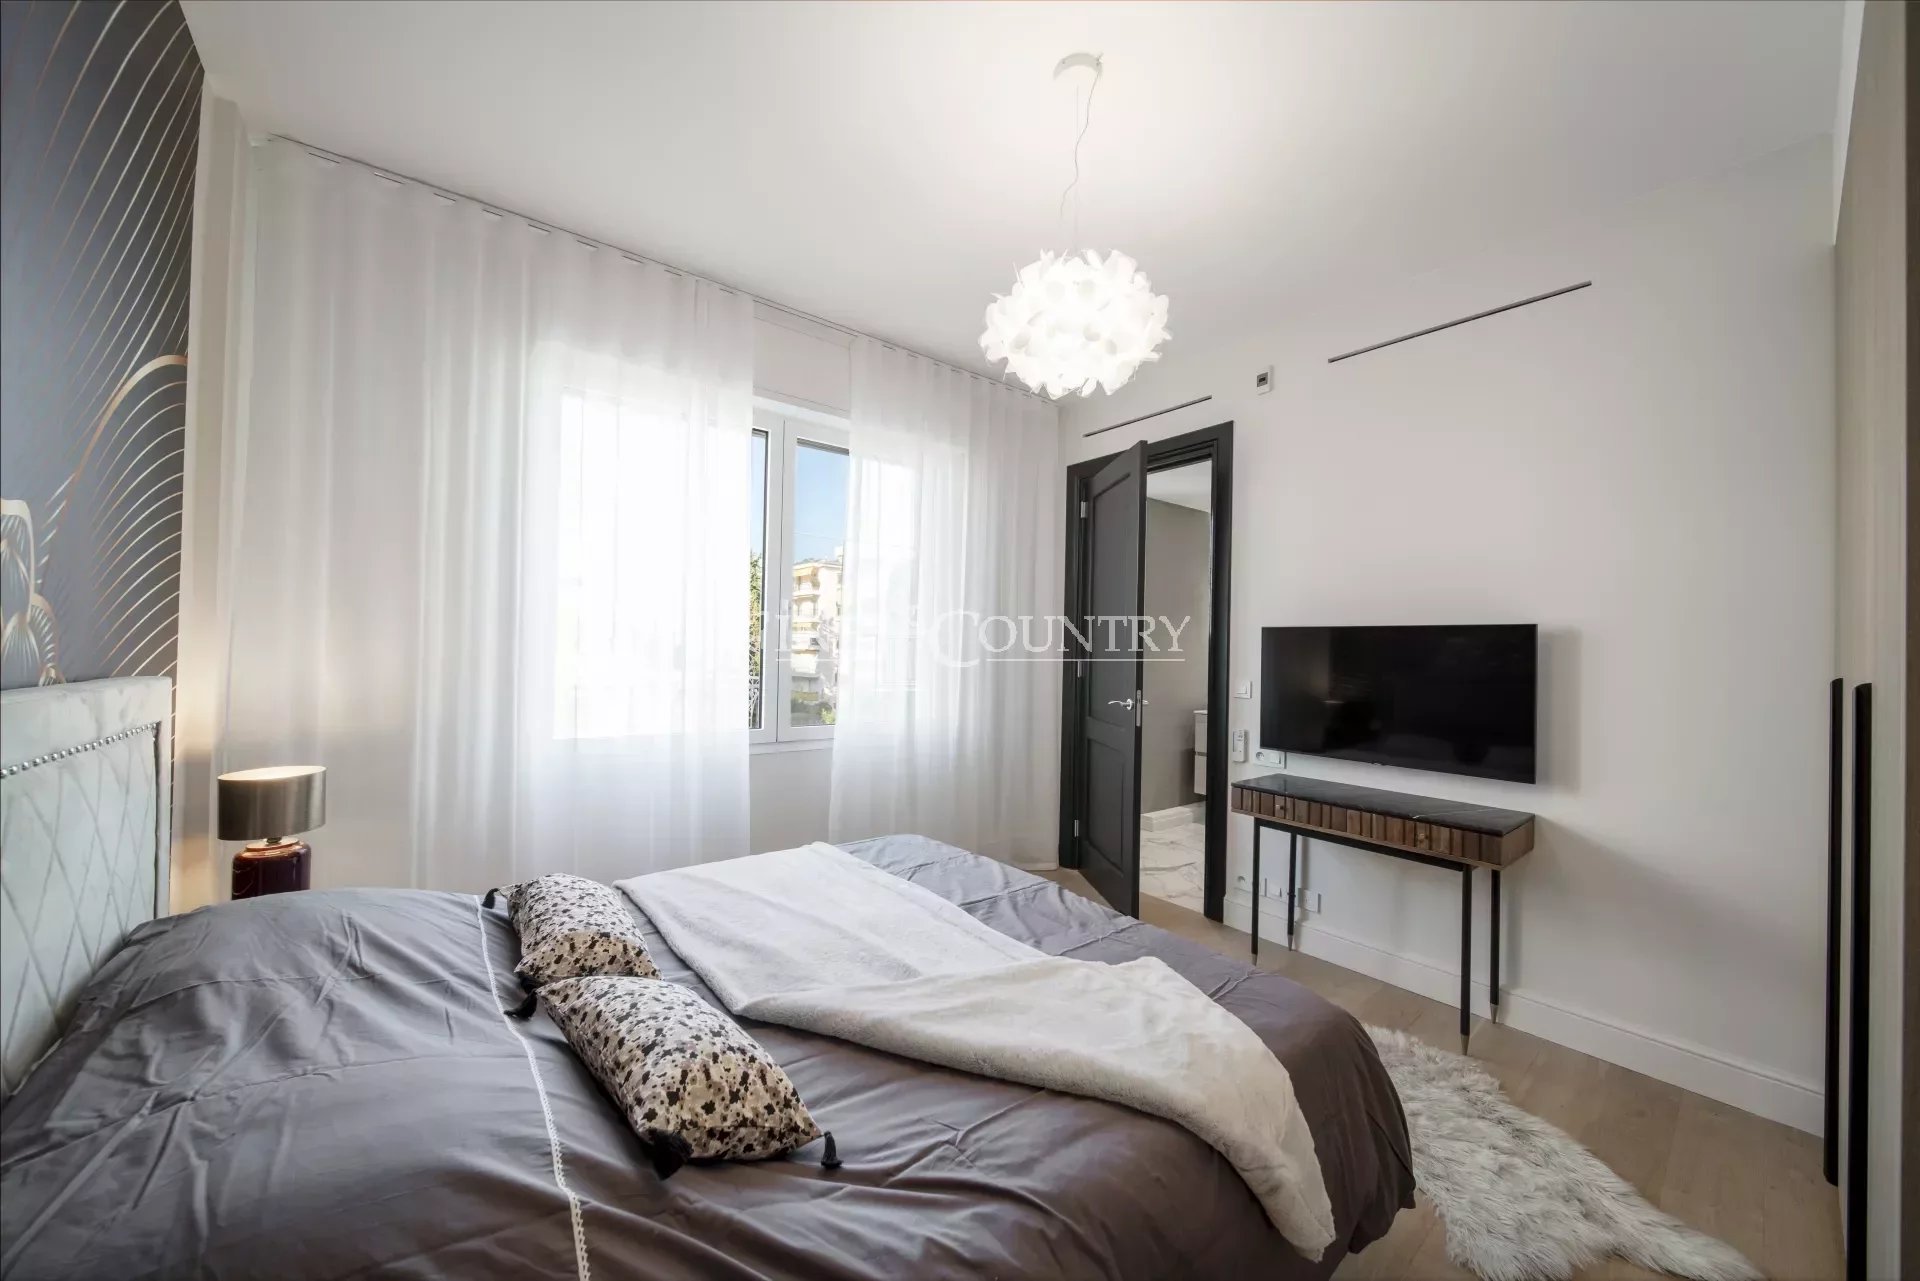 Photo of Apartment For Sale in Cannes, La Croisette